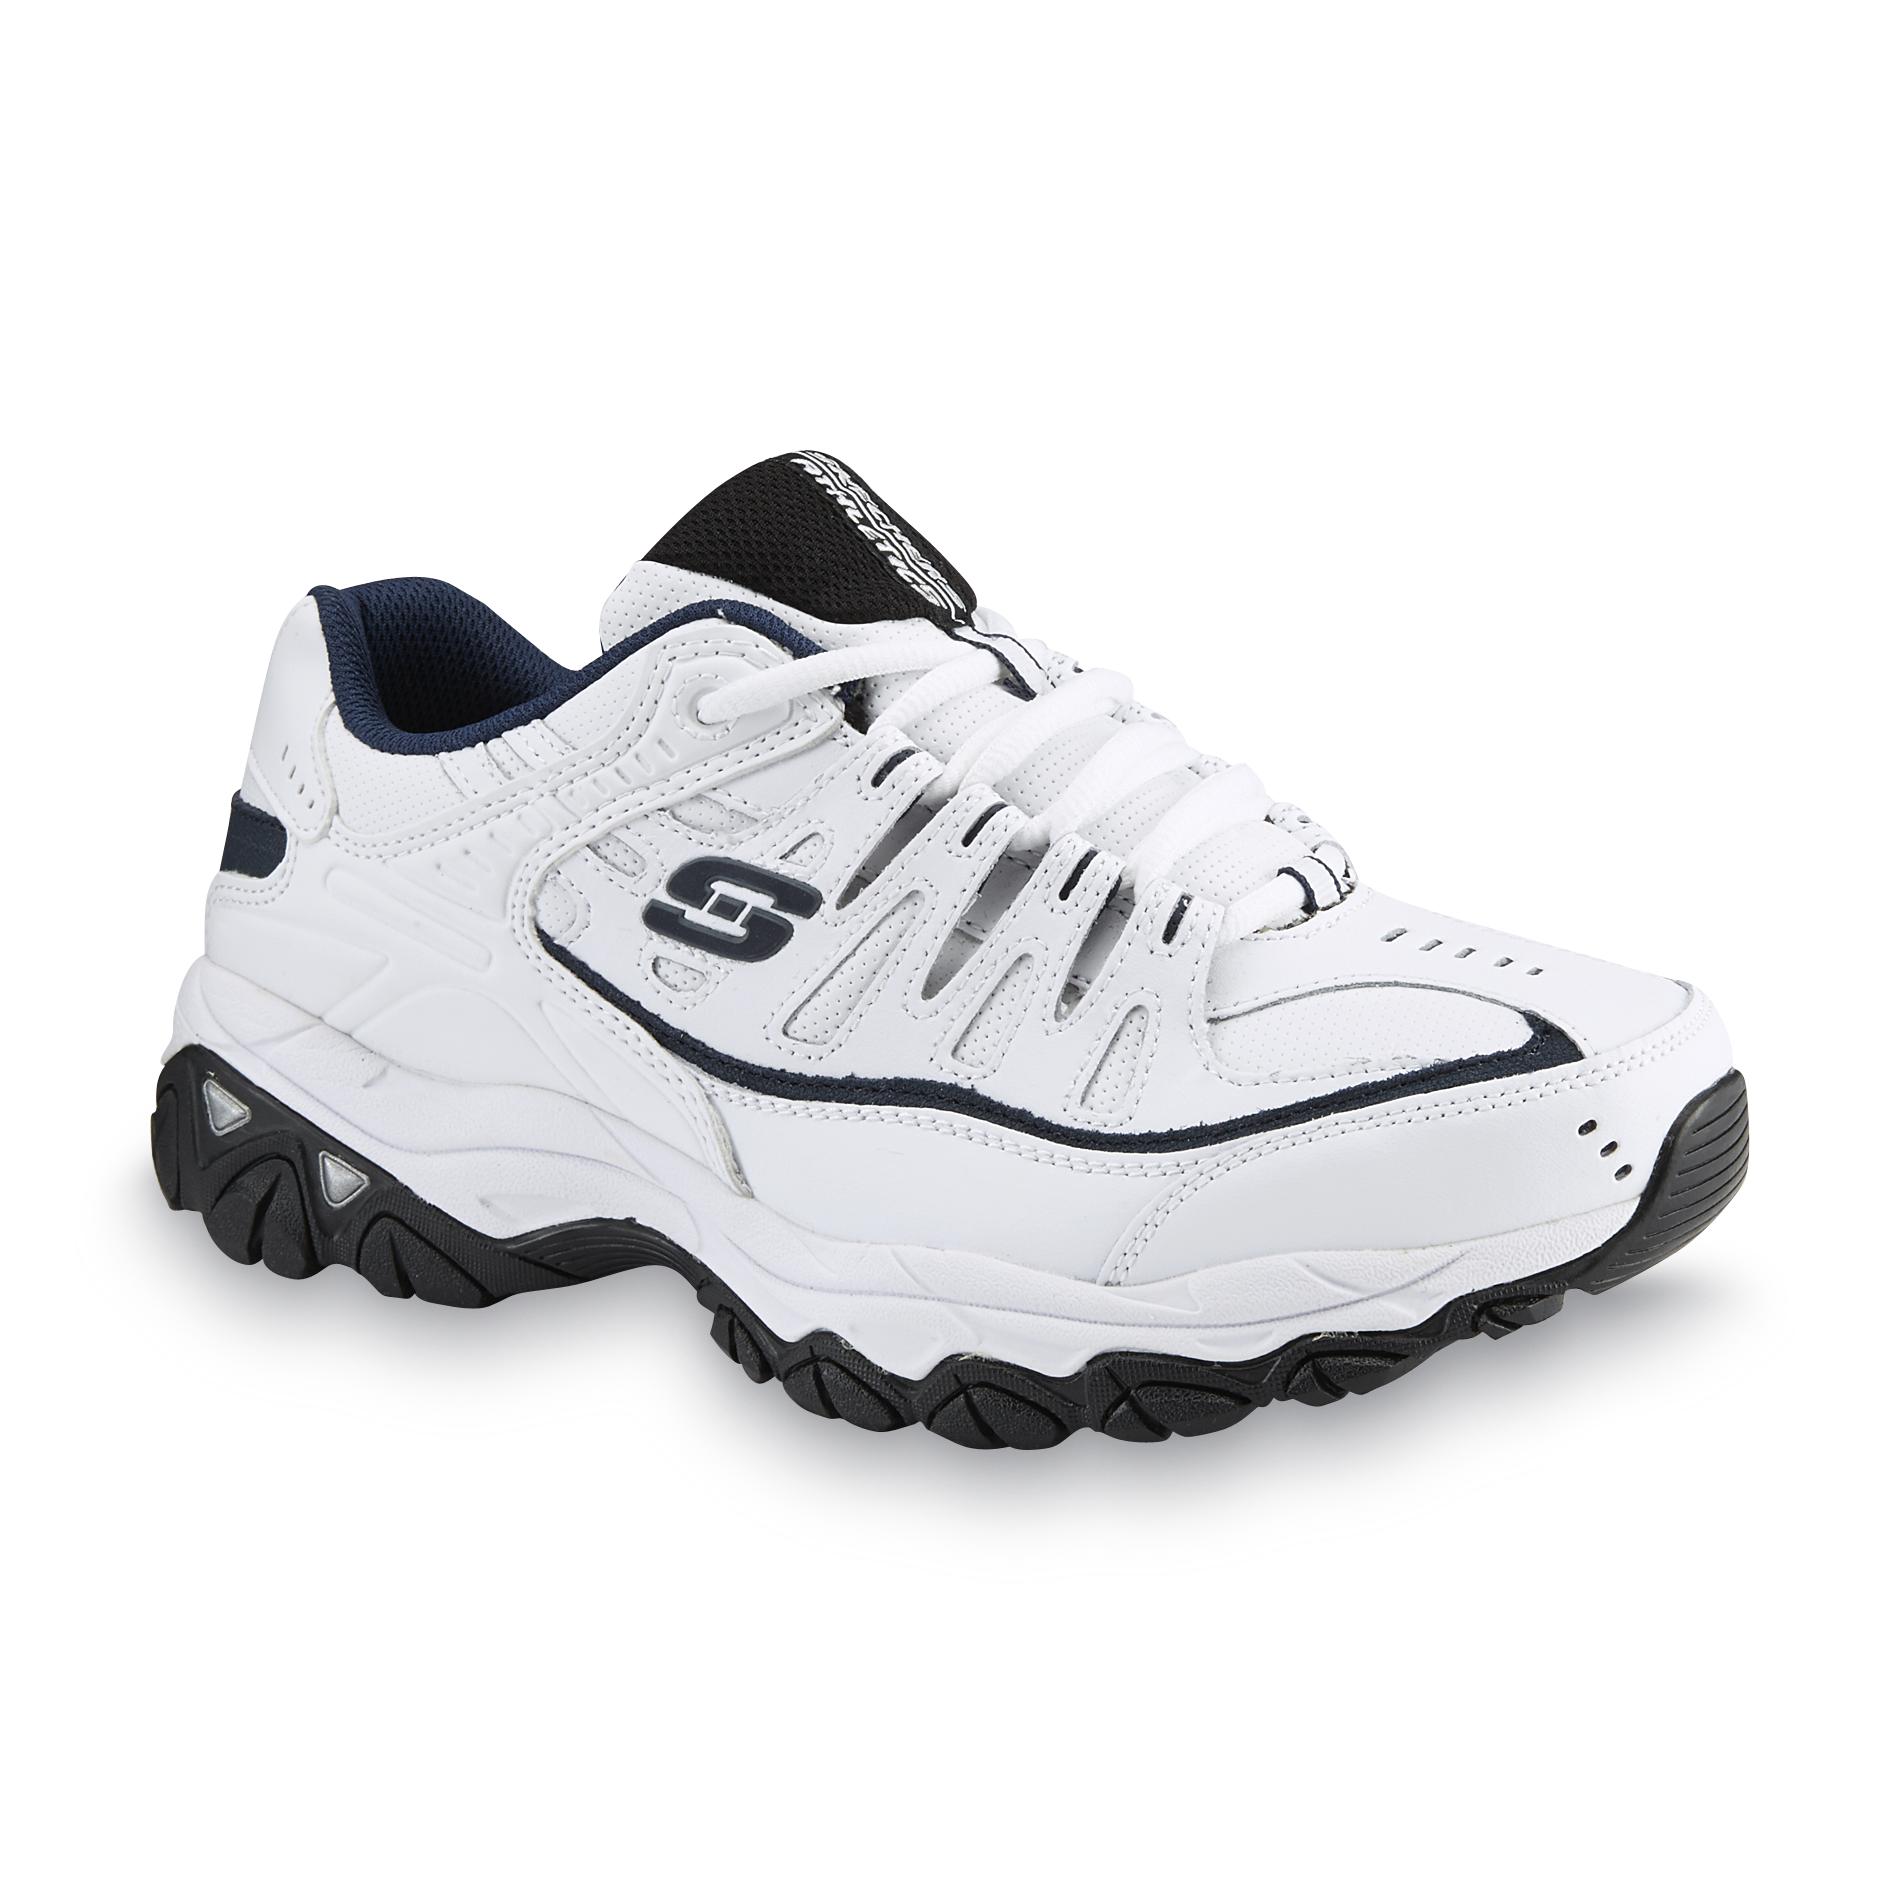 white sketcher tennis shoes